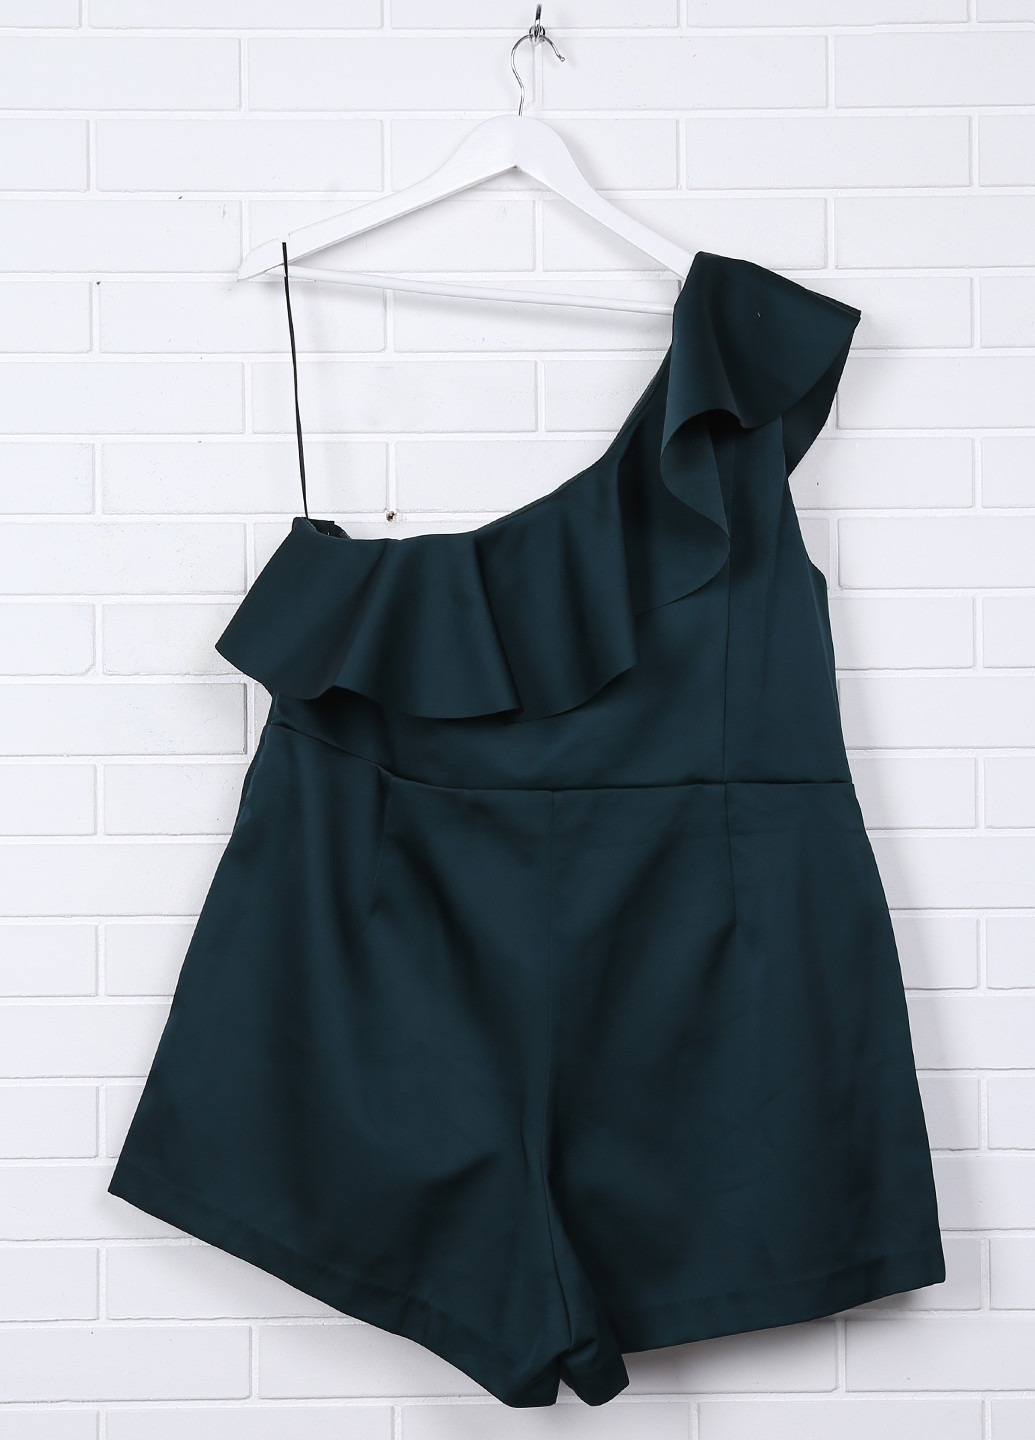 Комбинезон H&M комбинезон-шорты однотонный темно-зелёный кэжуал